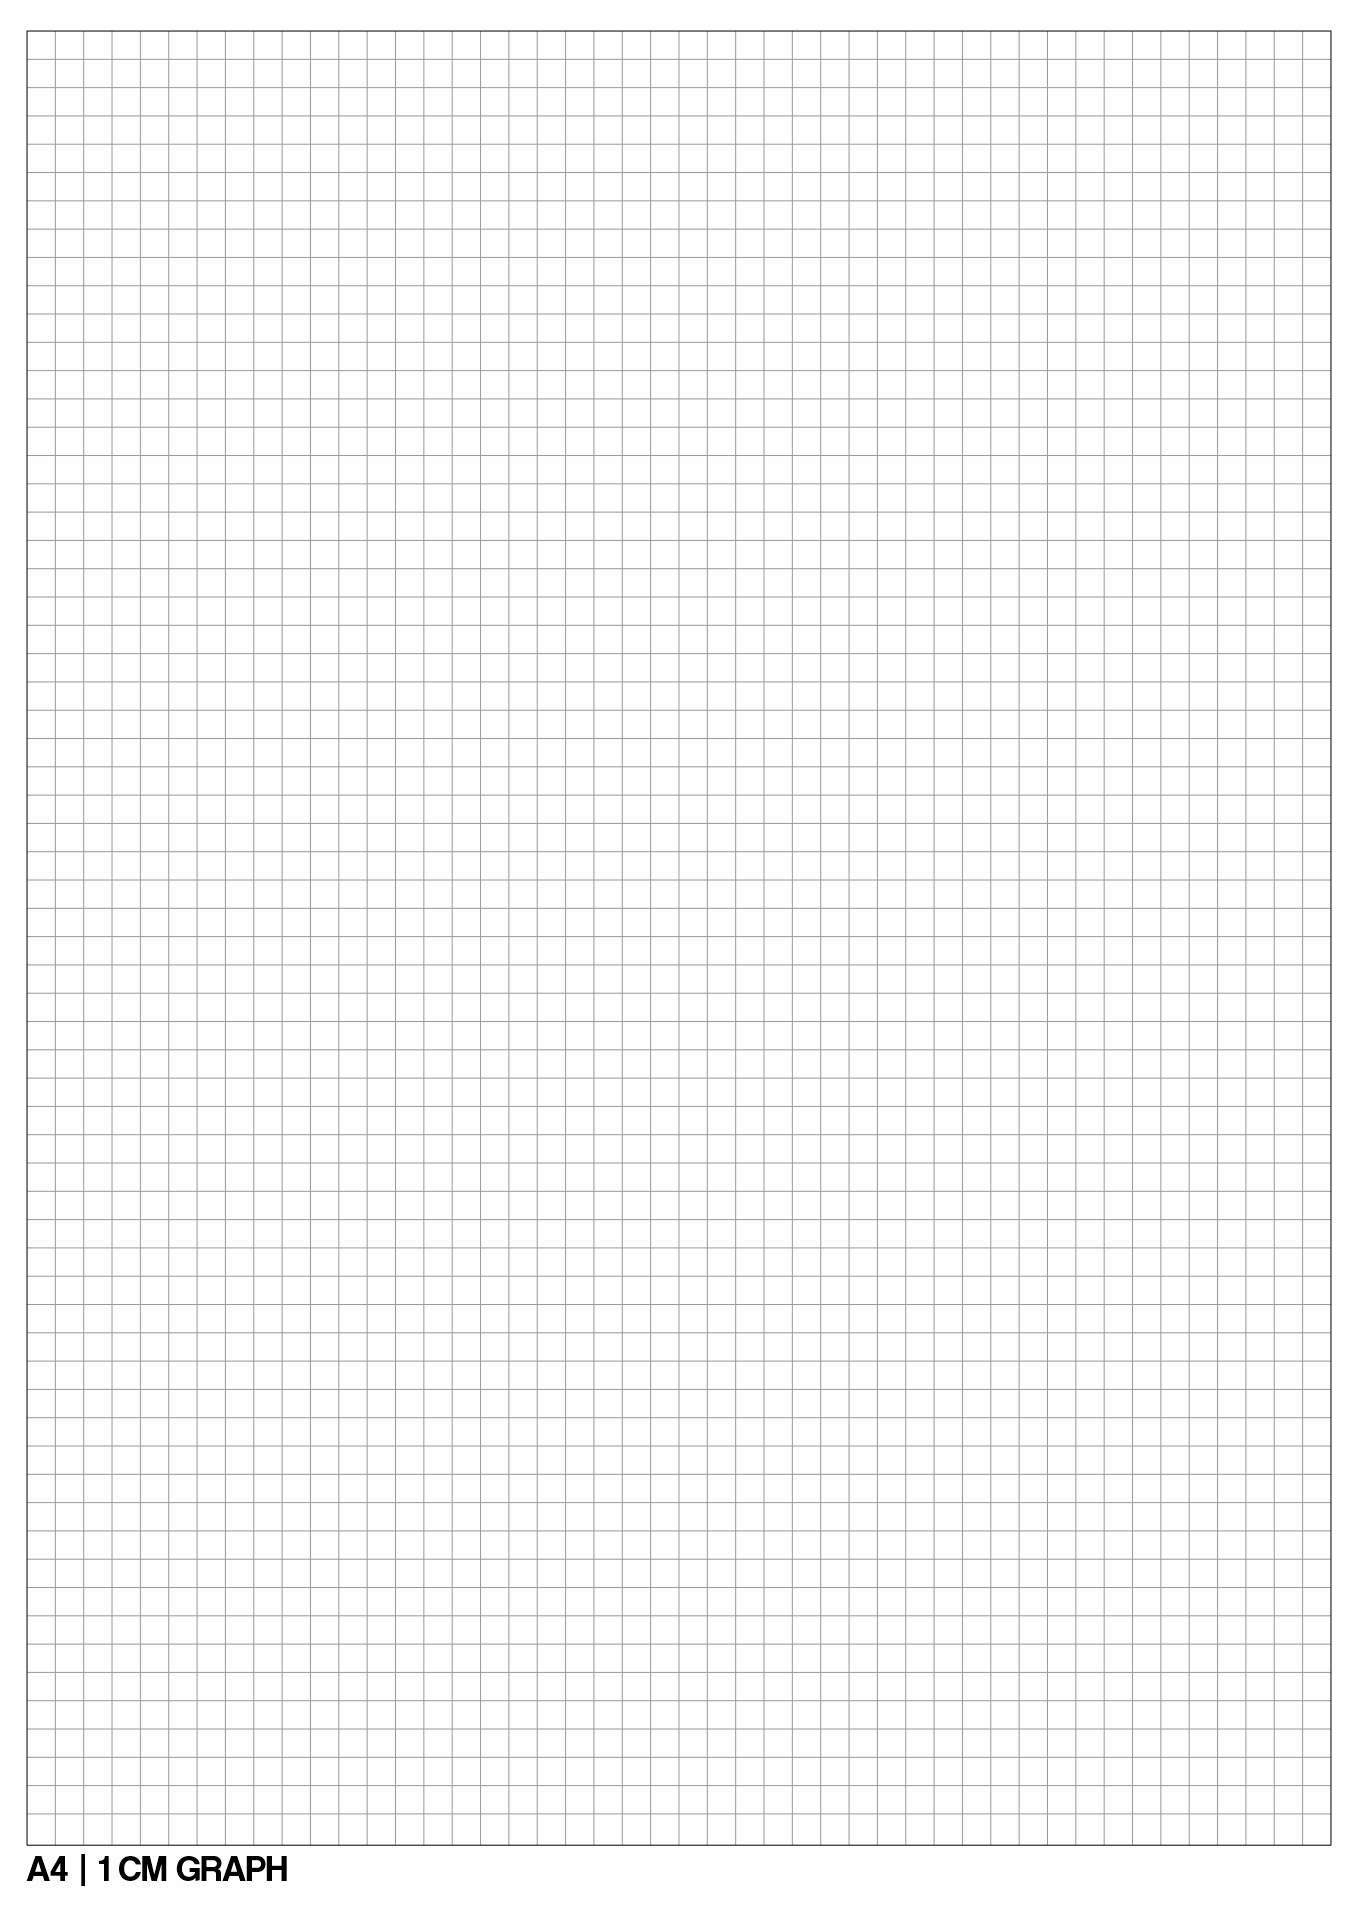 Printable Graph Paper 1Cm Image